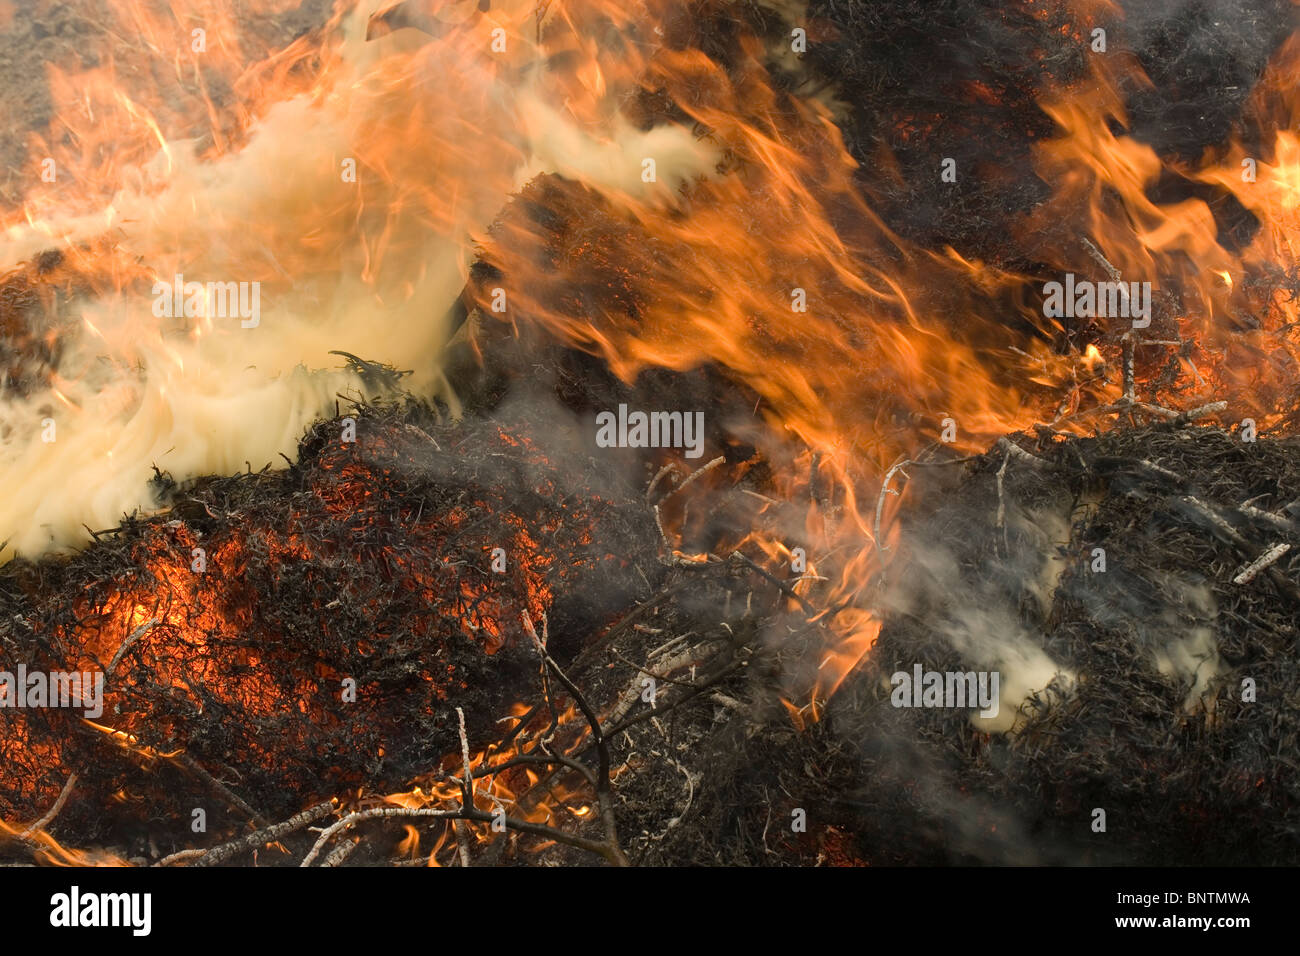 Bonfire alight. Flames; smoke. Stock Photo